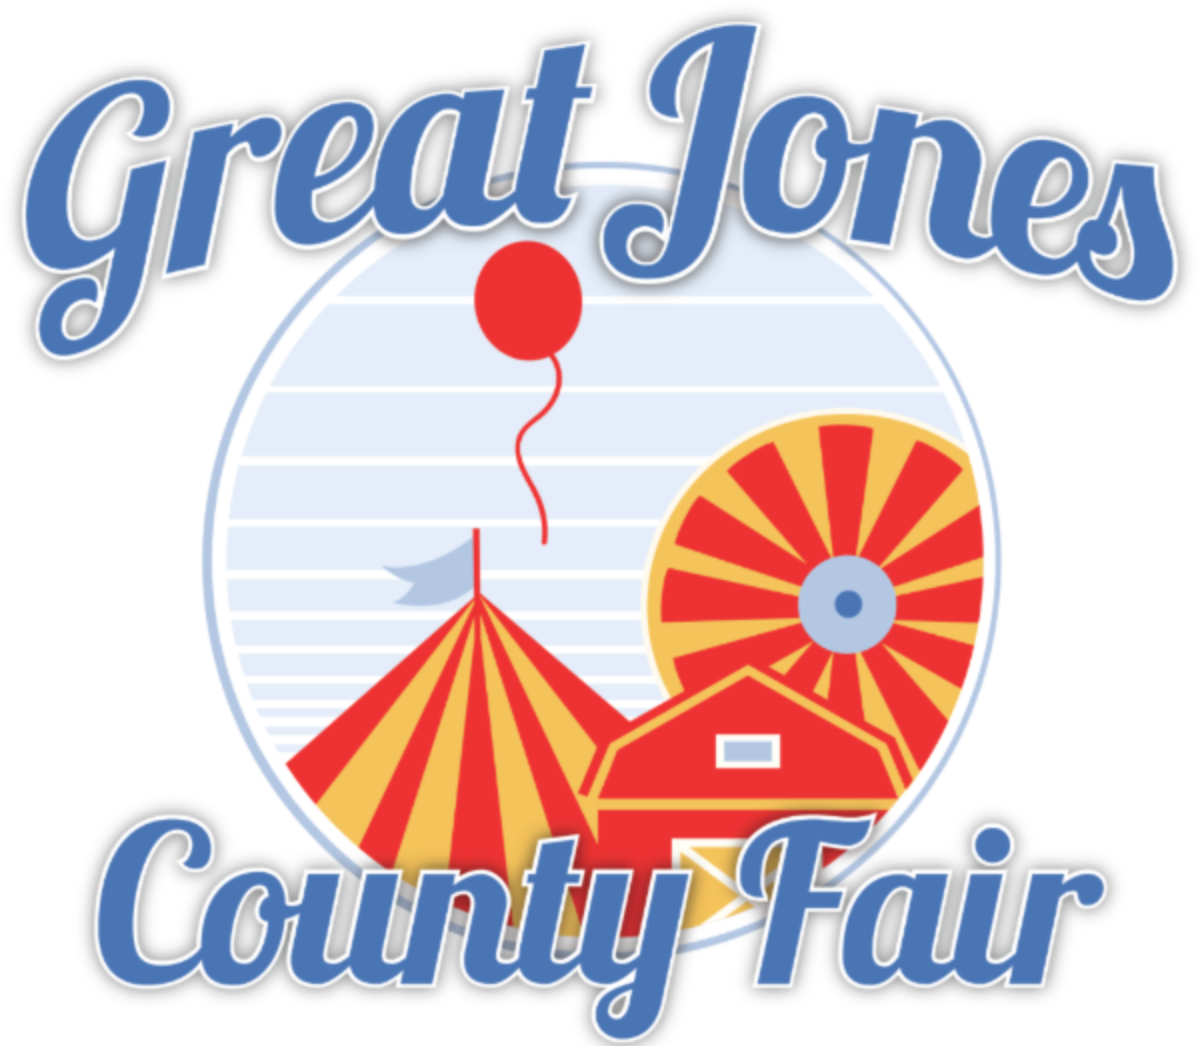 The Great Jones County Fair presented by Wellmark